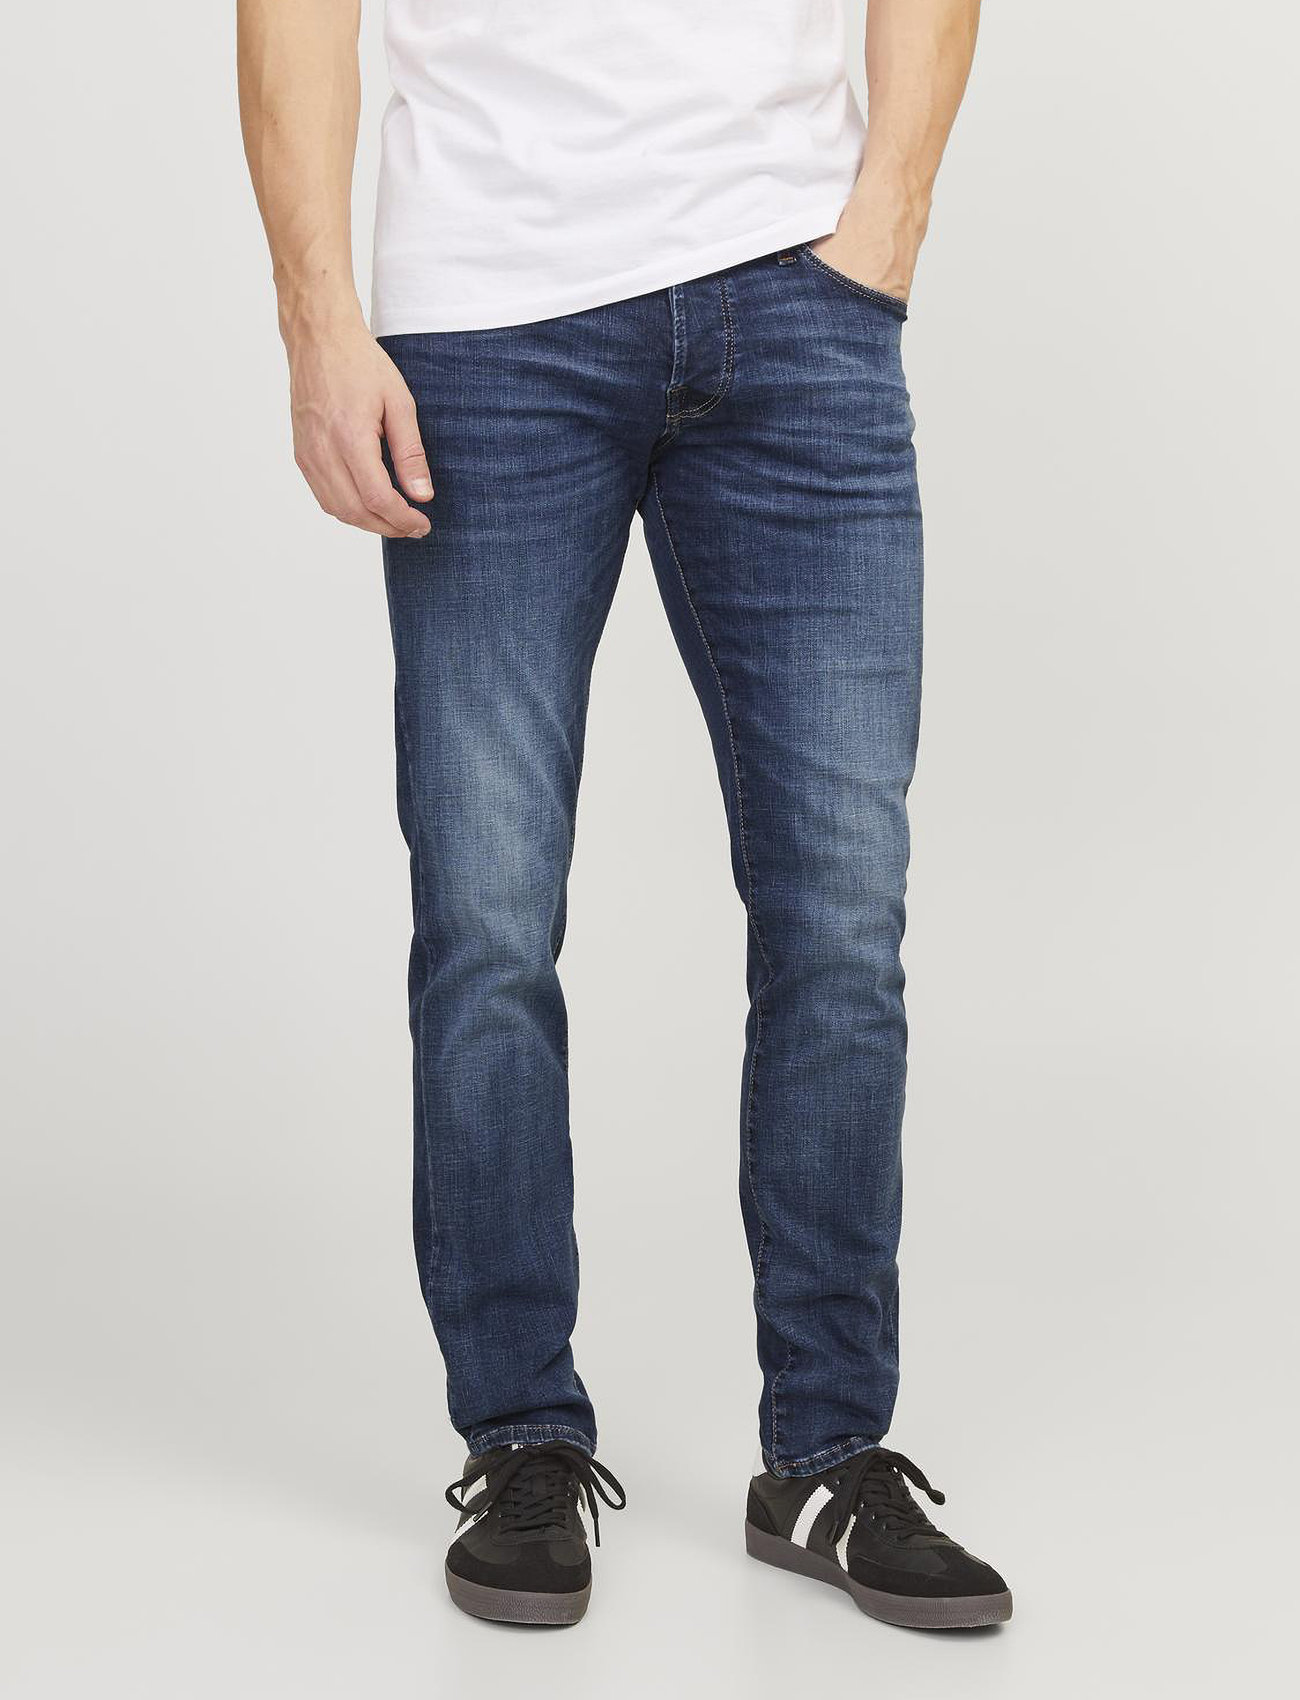 Jack Jones Mens Clothing Jeans Istanbul Stock Photo 1219563502 |  Shutterstock